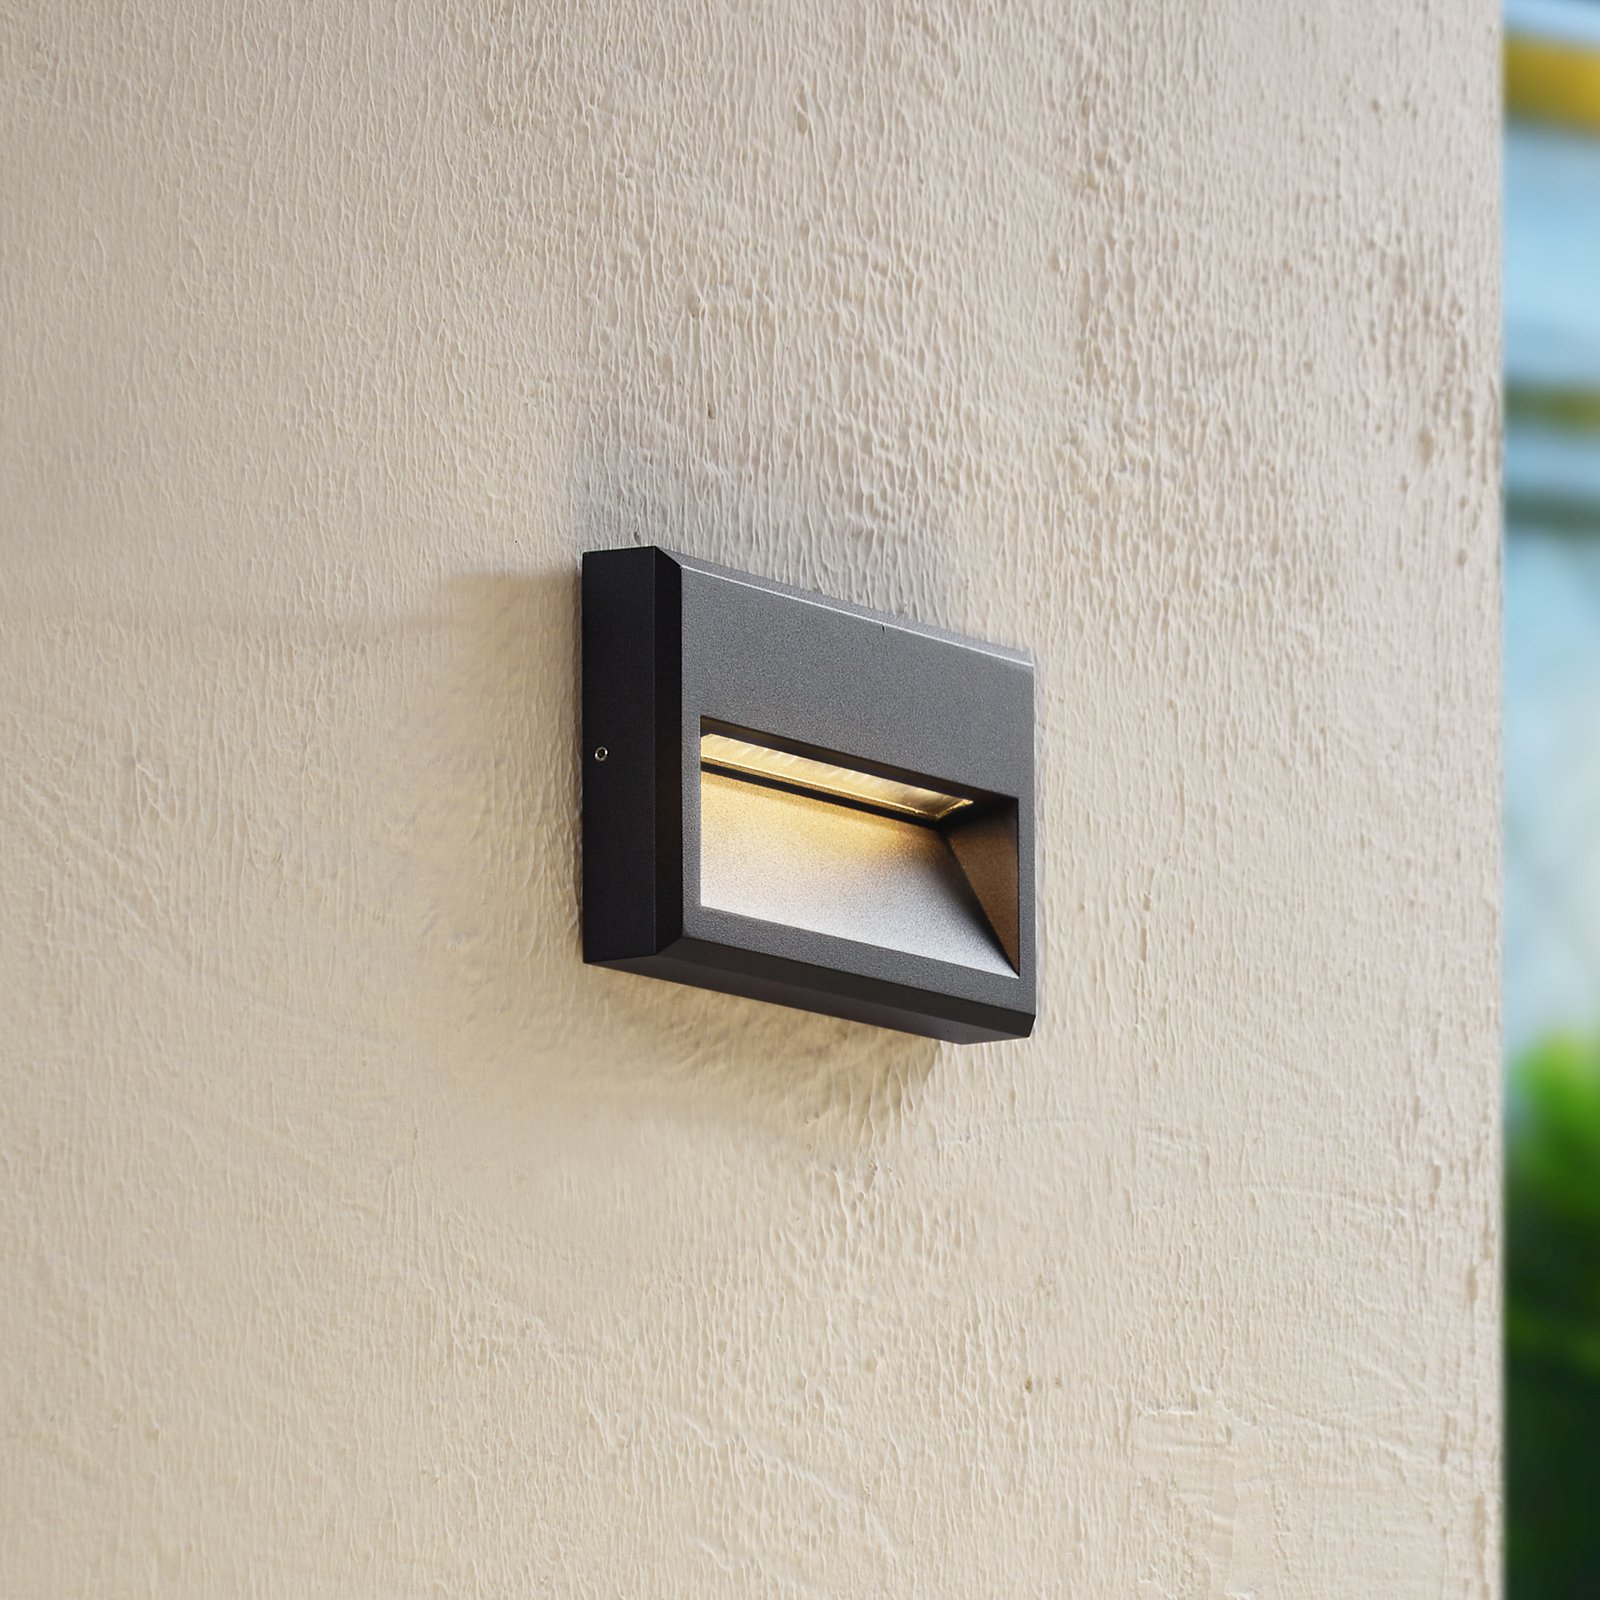 Lucande LED outdoor wall light Weno, black, aluminium, IP65